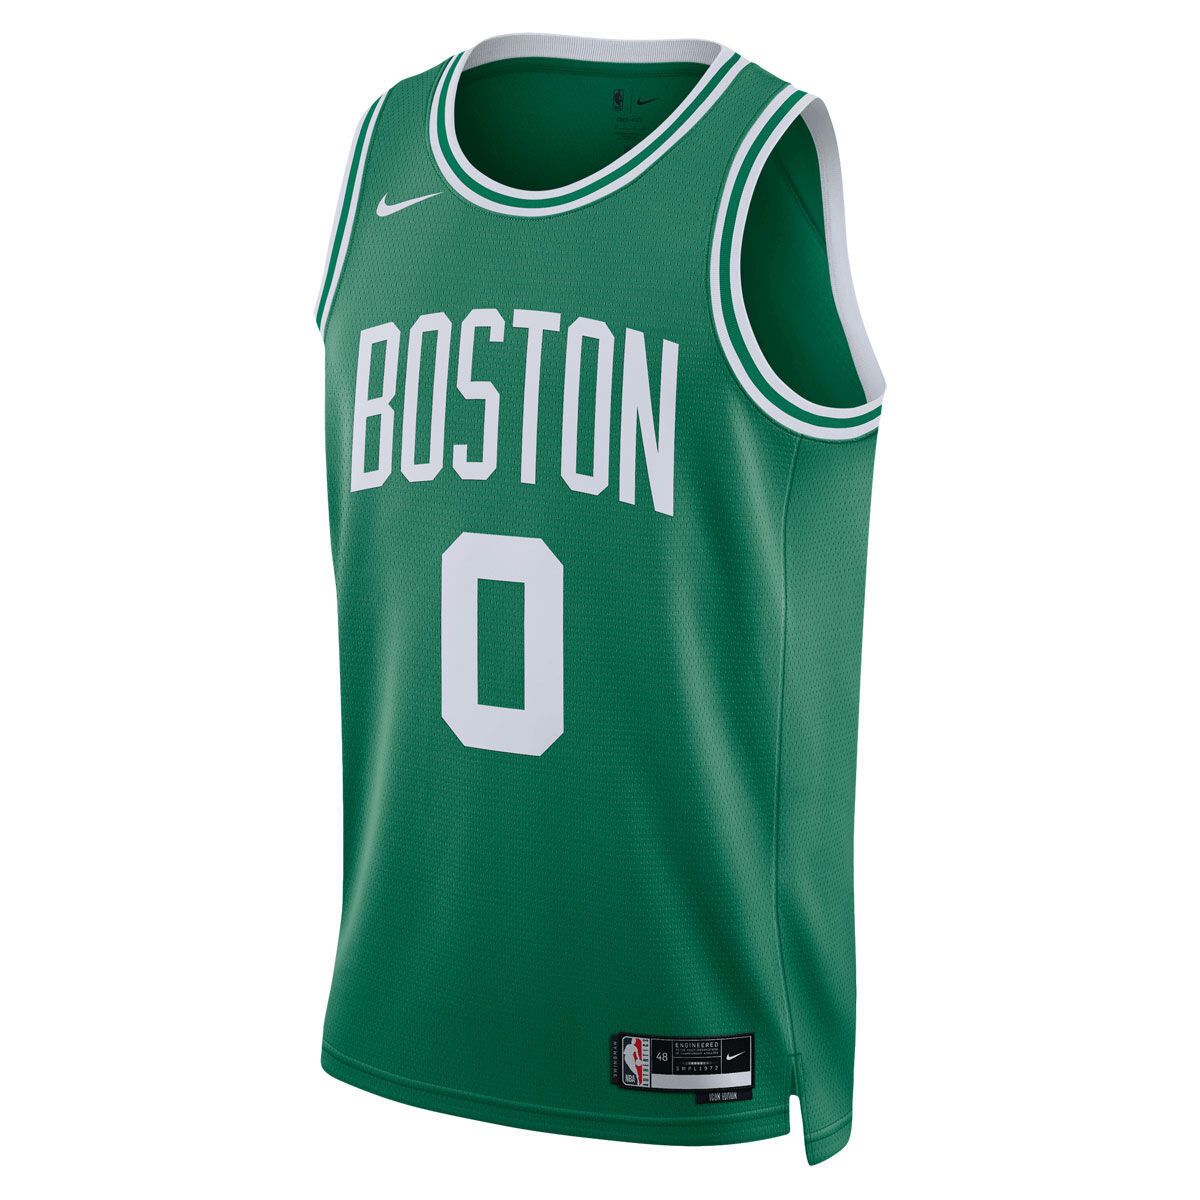 Men's Antigua White Boston Celtics Victory Full-Zip Hoodie Size: Large